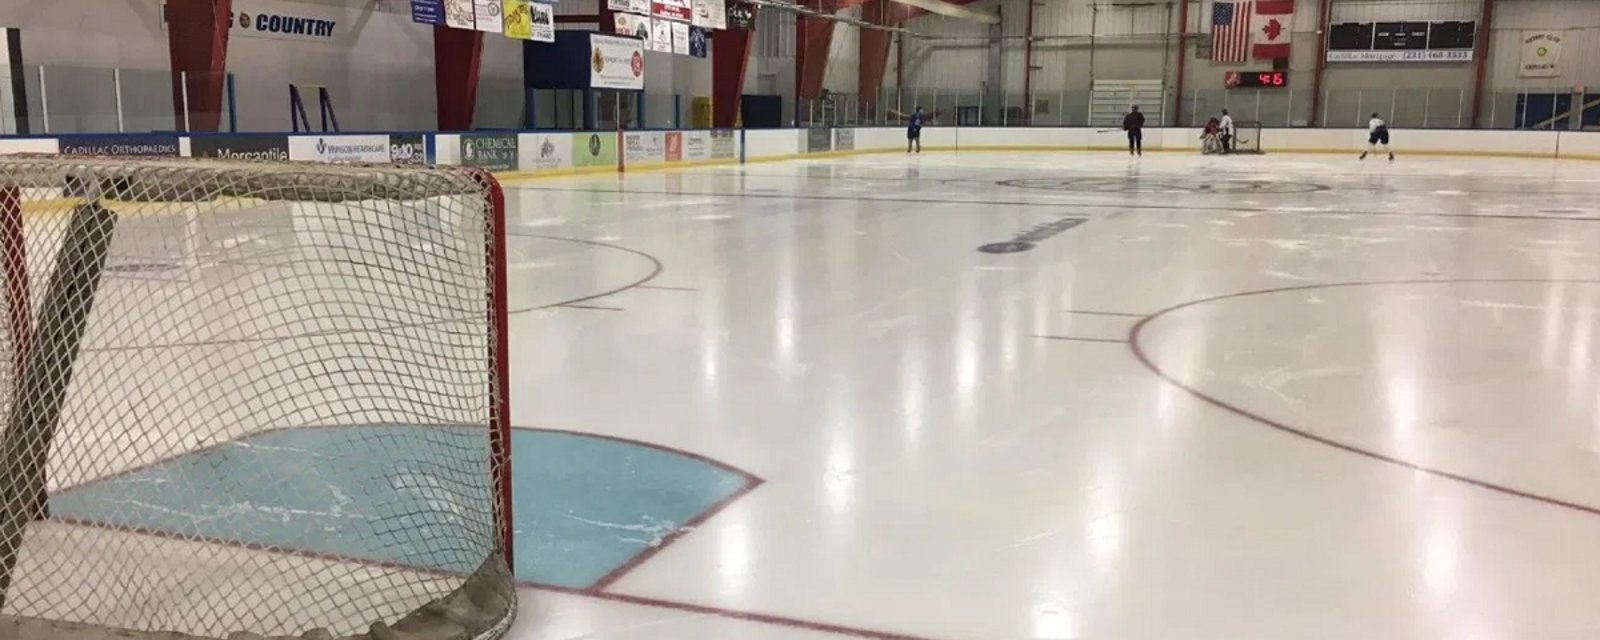 High school hockey player suffers “life threatening injuries.”